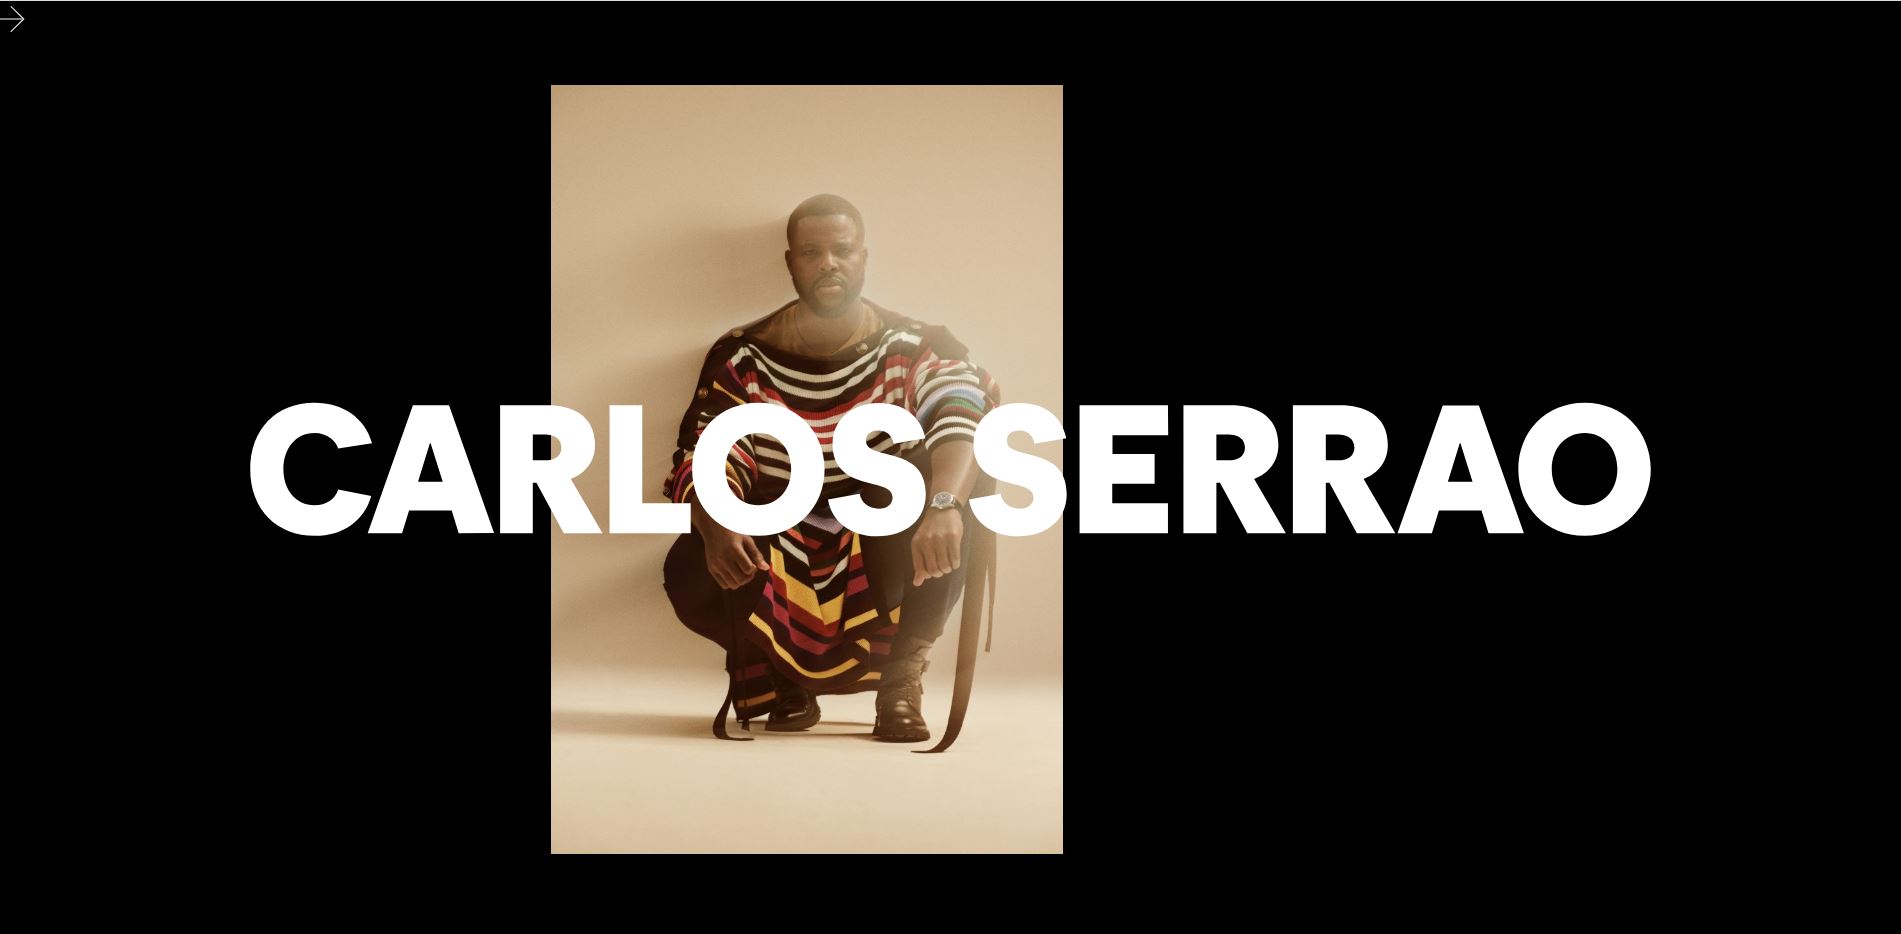 Carlos Serrao website screenshot